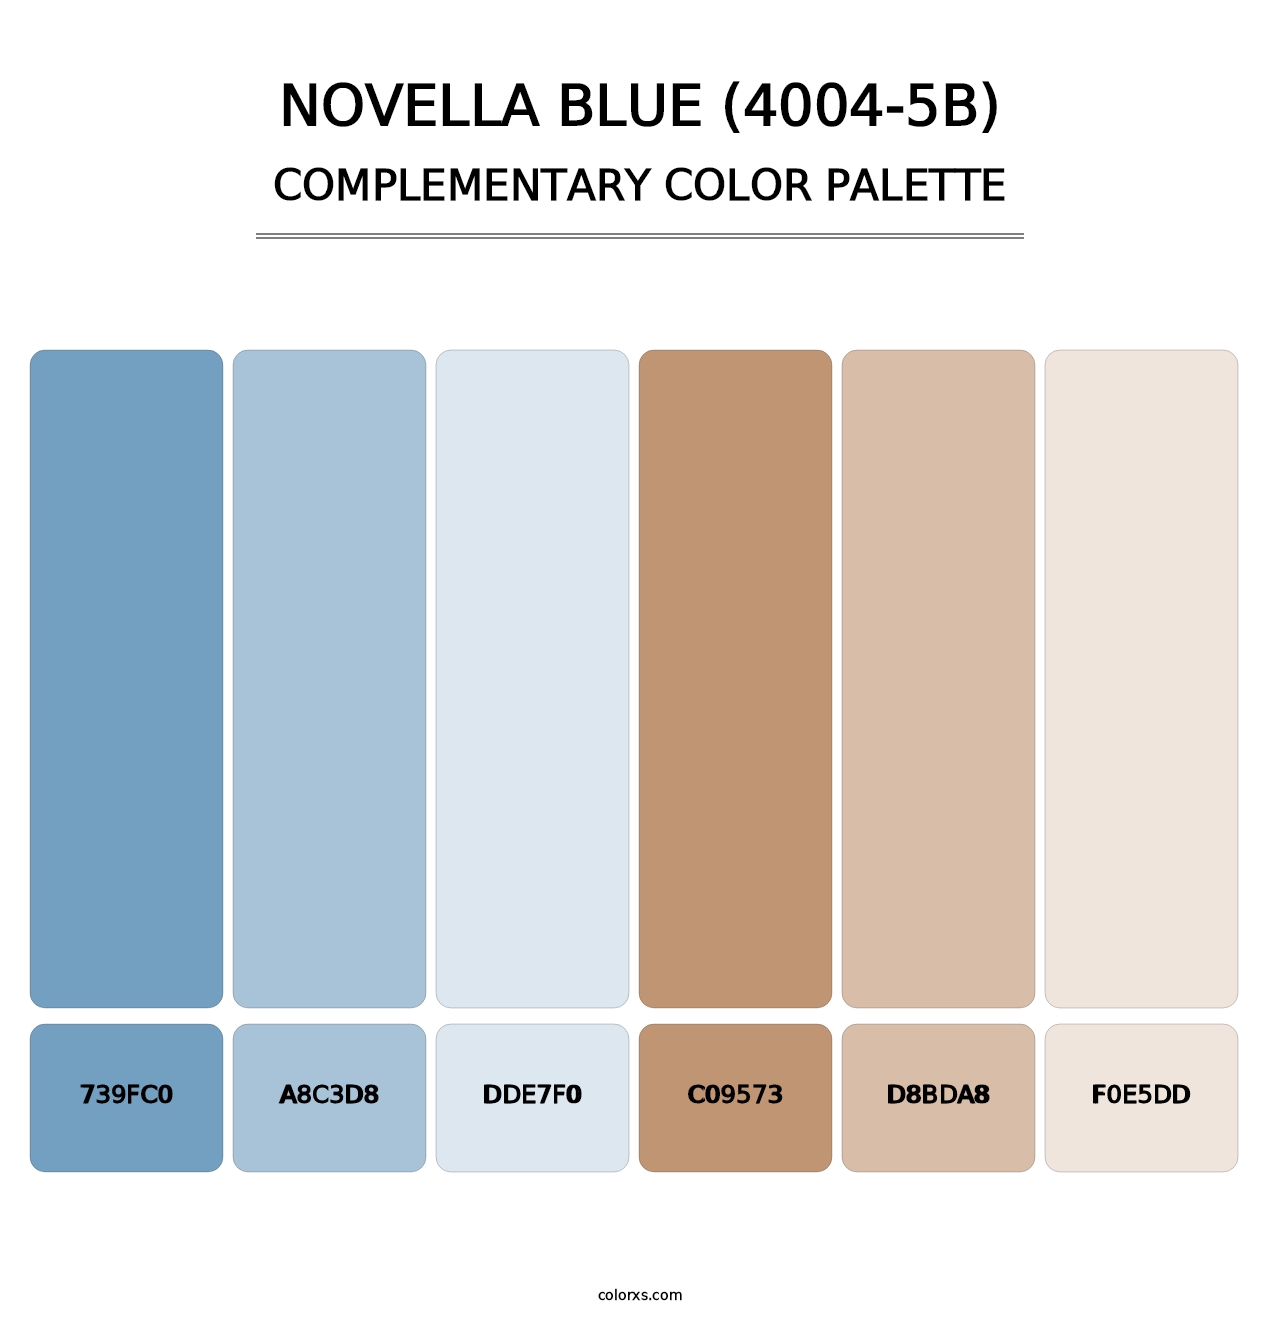 Novella Blue (4004-5B) - Complementary Color Palette